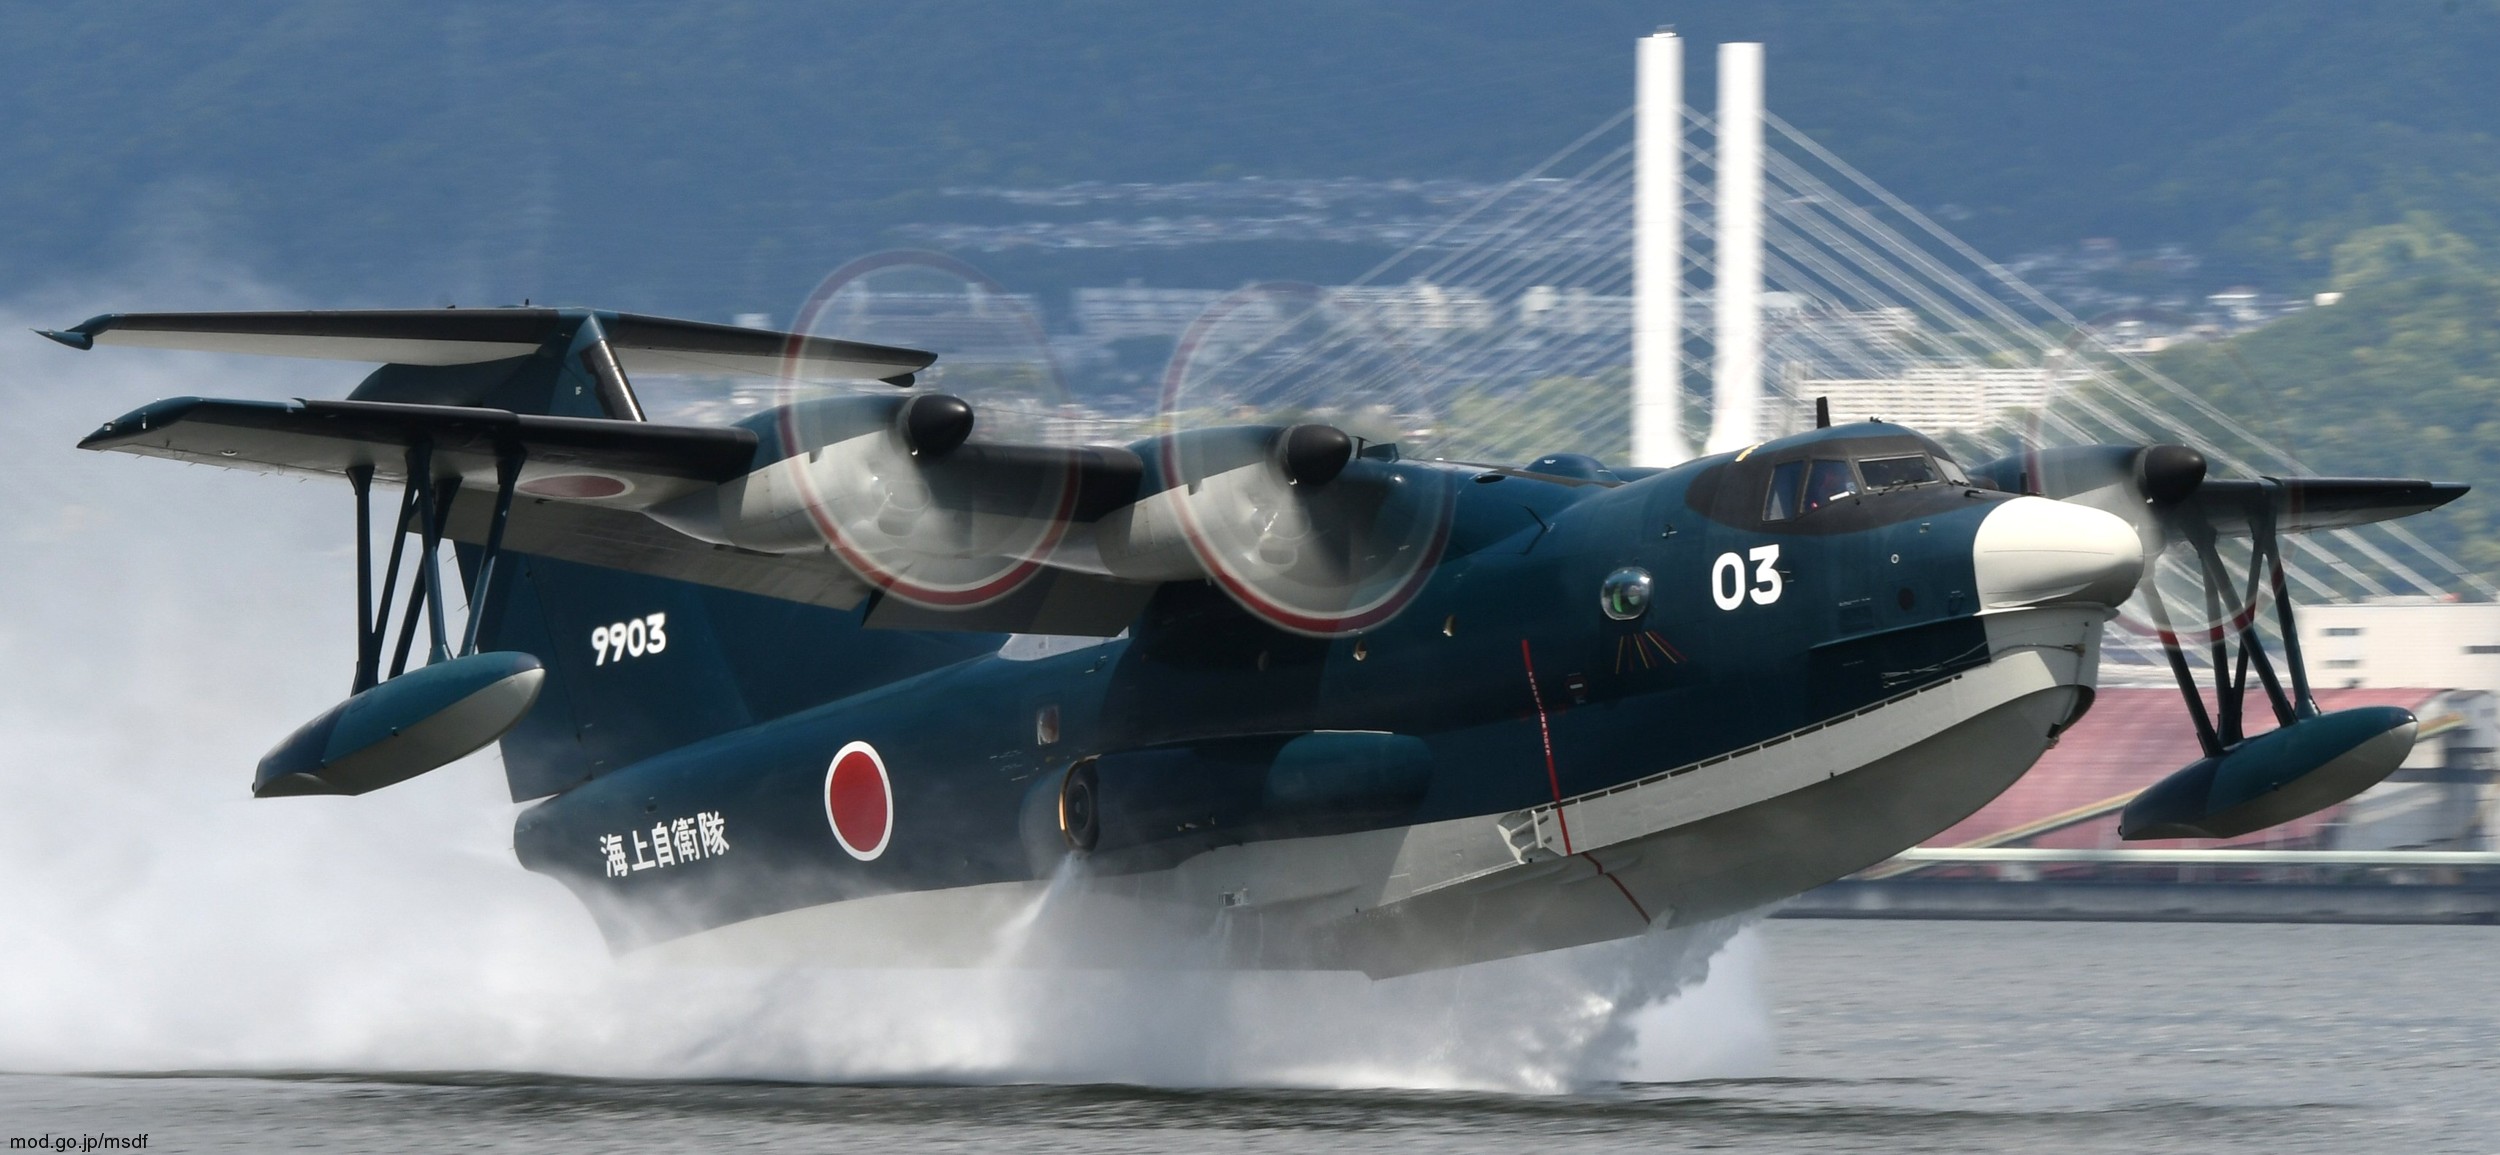 shin maywa us-2 flying boat japan maritime self defense force jmsdf sar 71 squadron atsugi 9903 05